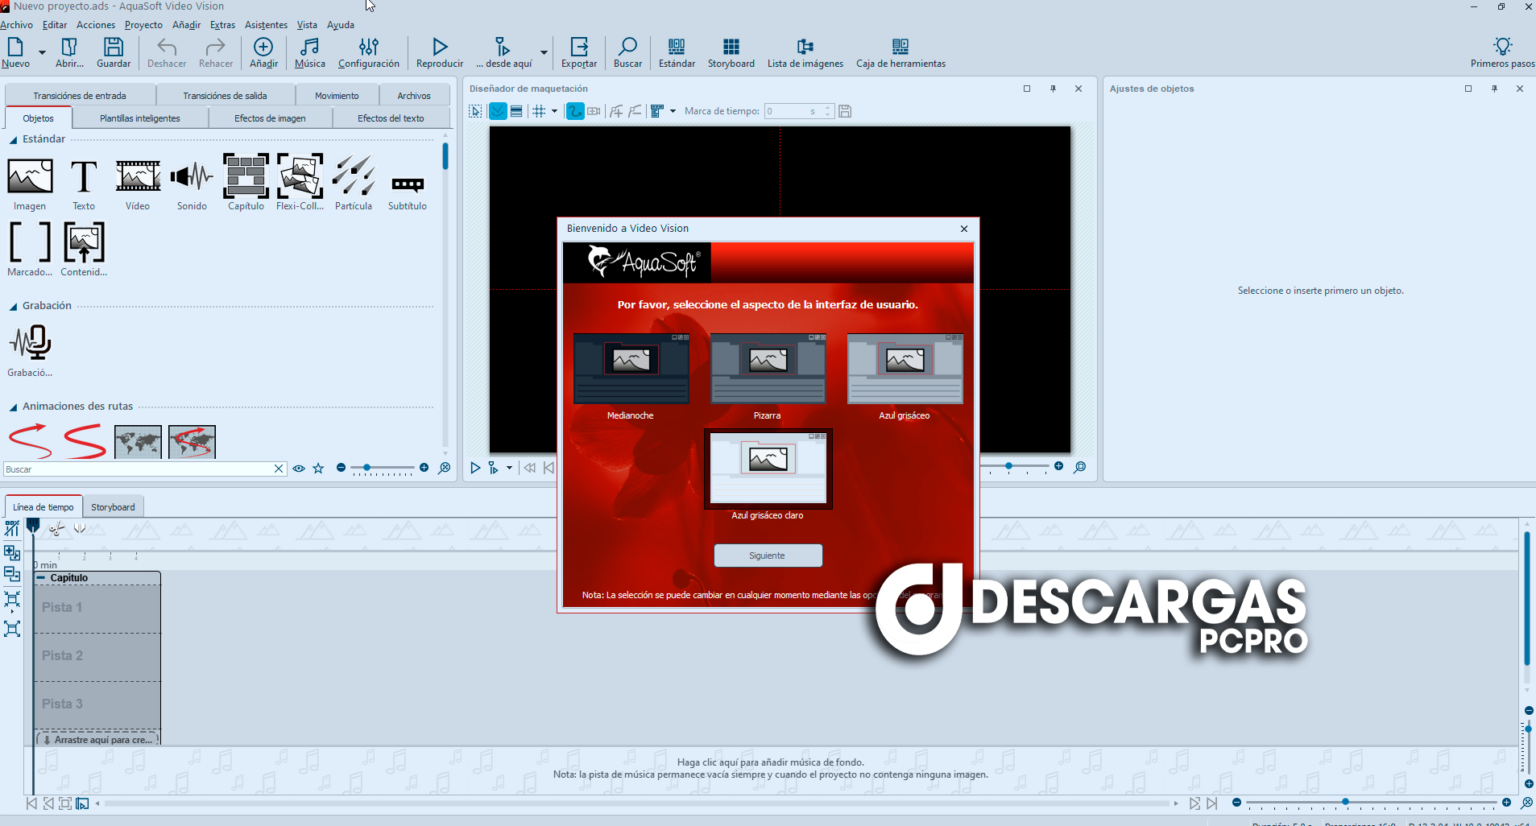 AquaSoft Video Vision 14.2.13 instaling